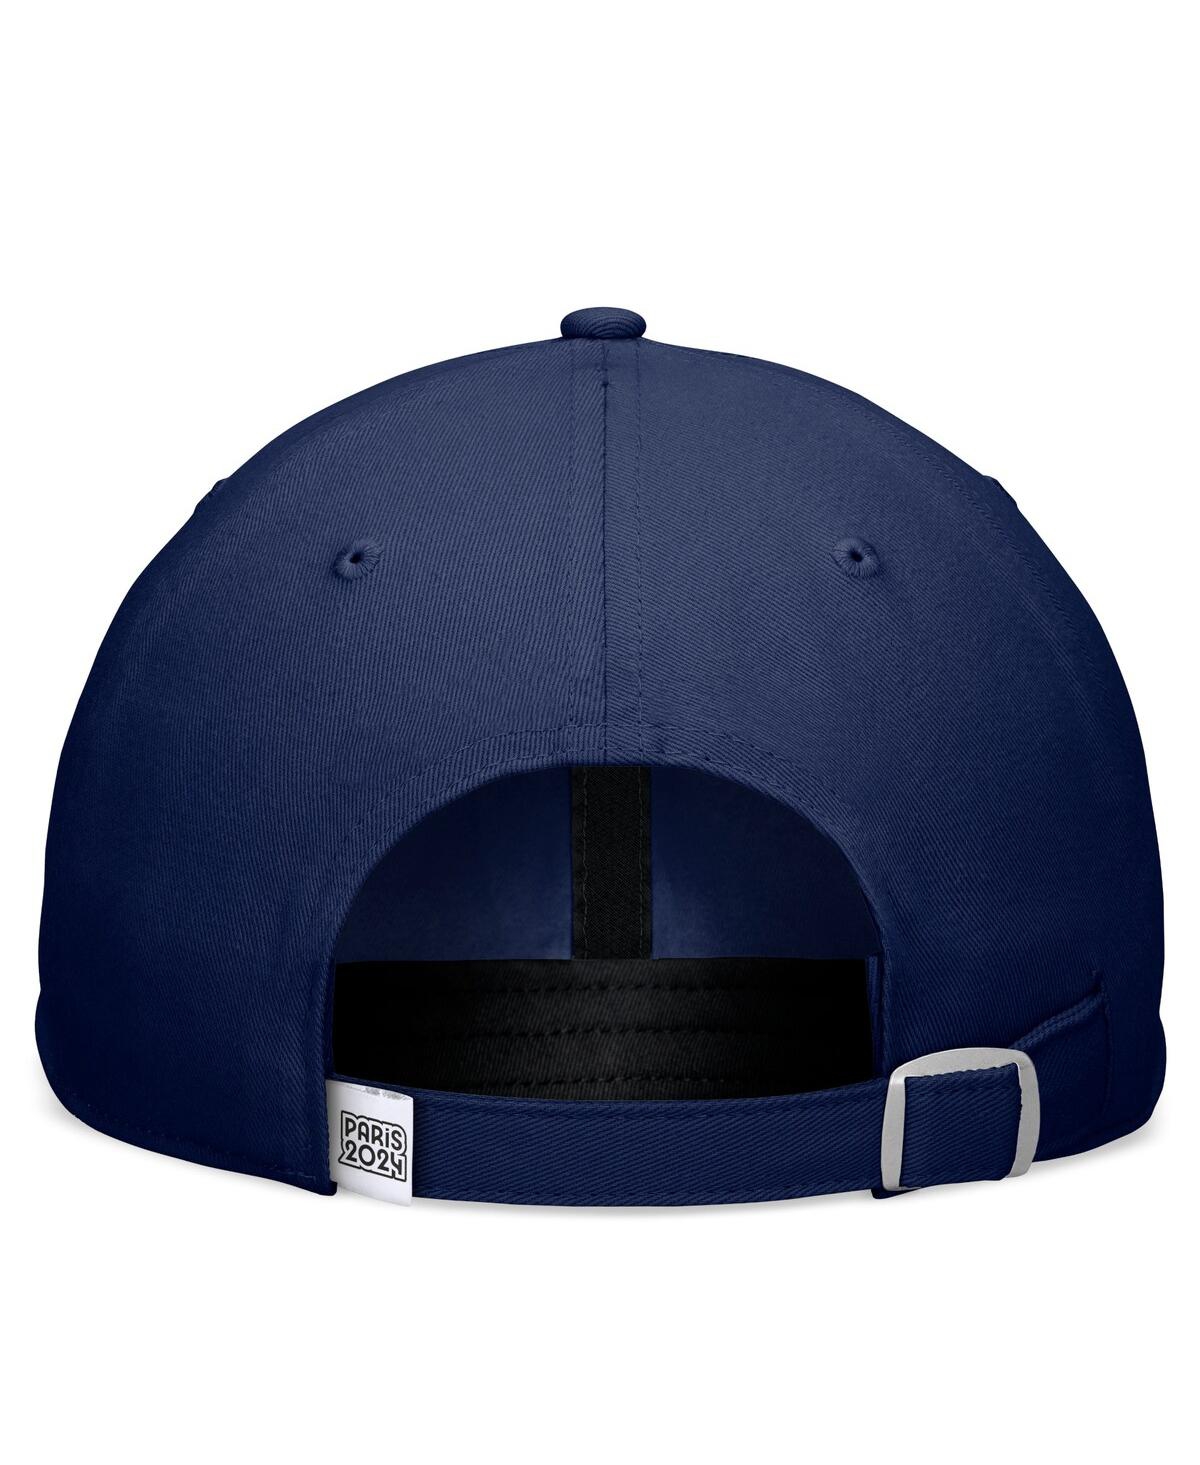 Shop Fanatics Branded Men's Navy Paris 2024 Summer Adjustable Hat